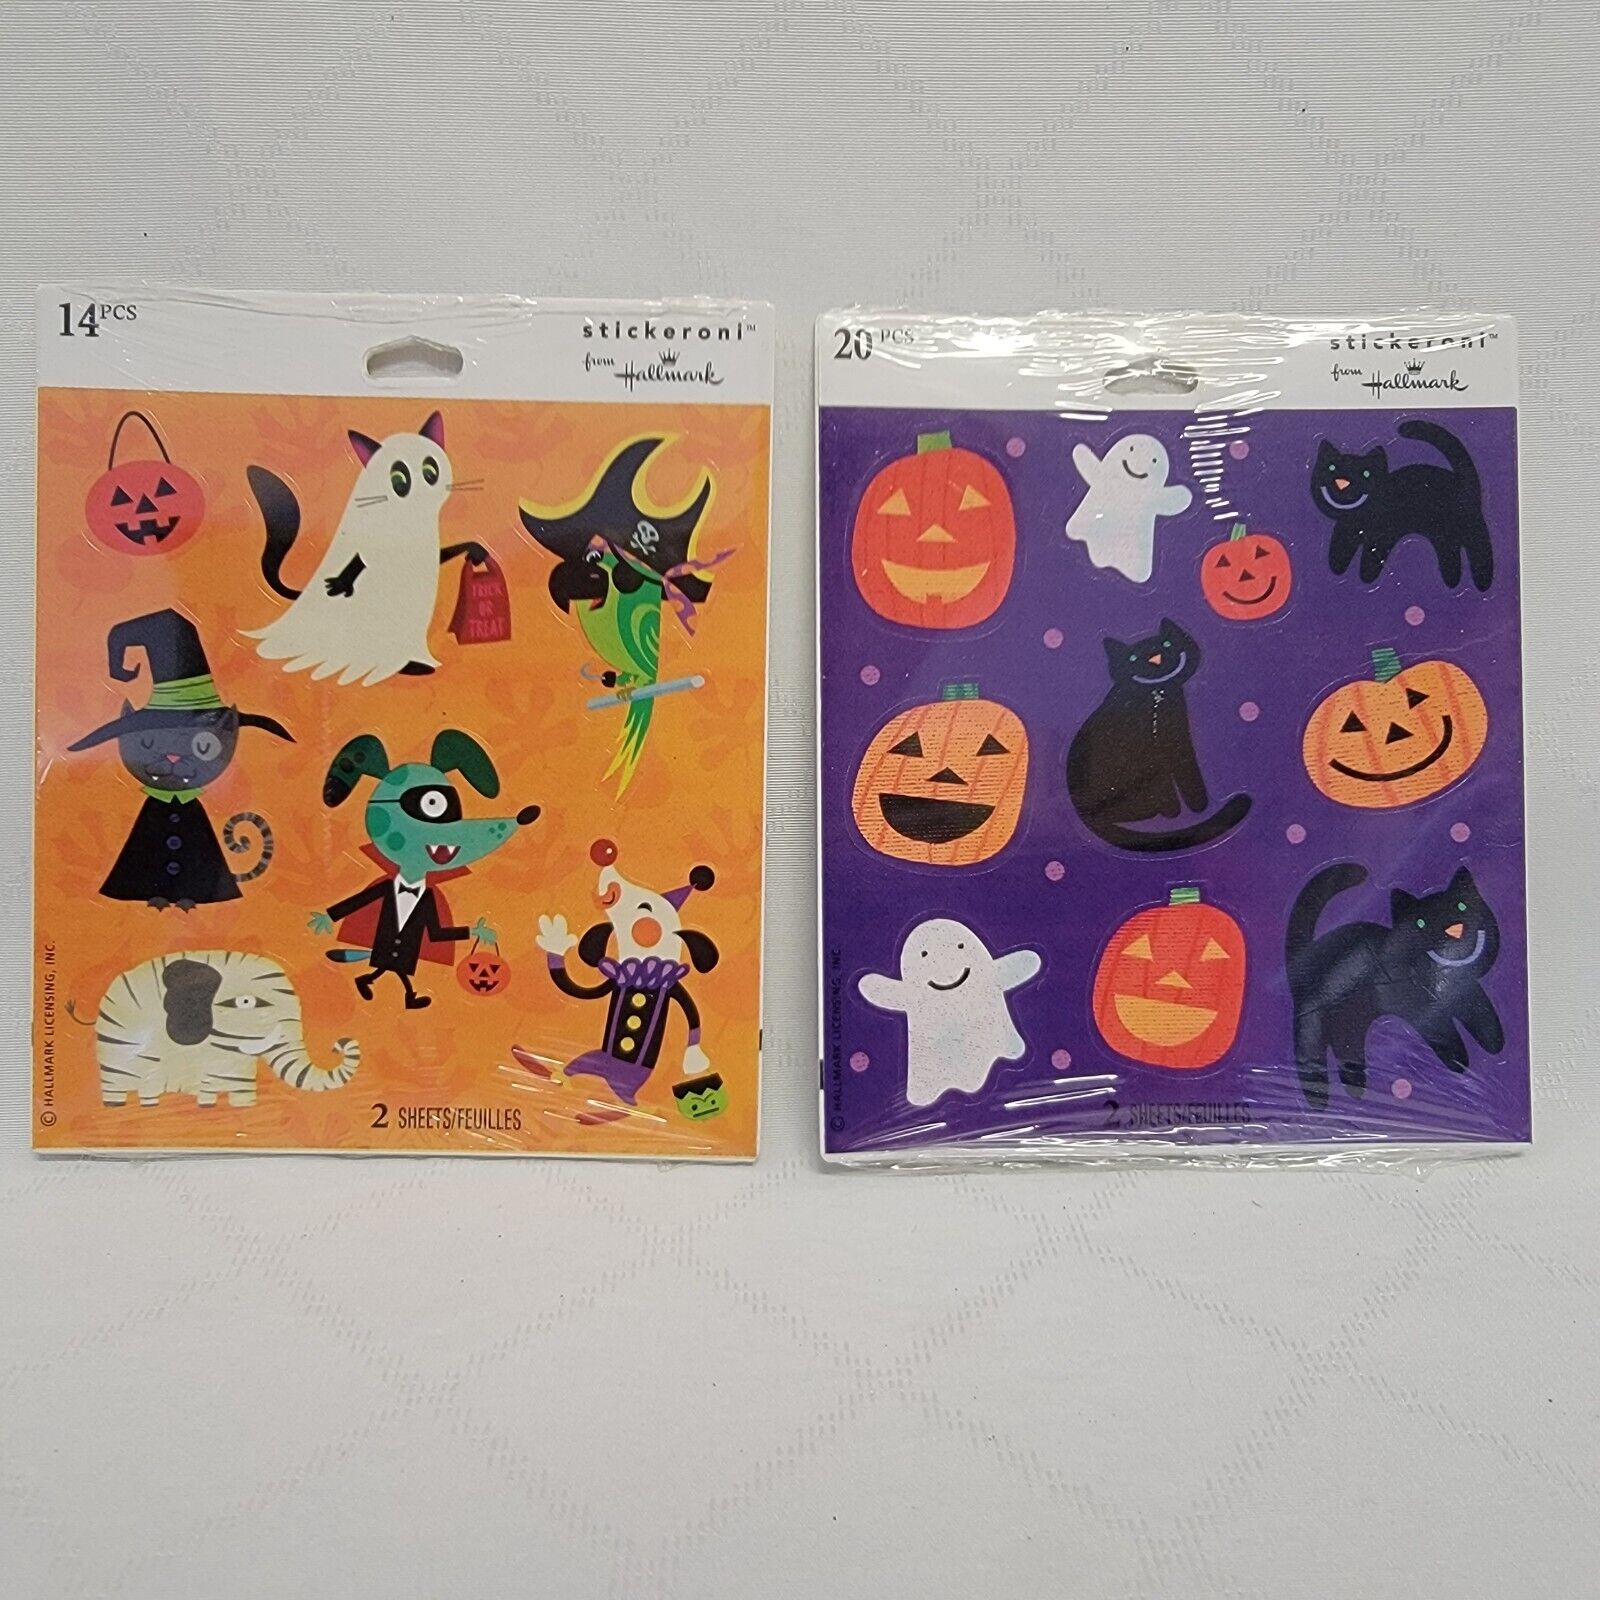 Halloween Kids Stickers Stickeroni From Hallmark 1-14 pcs pack & 1-20 pcs pack